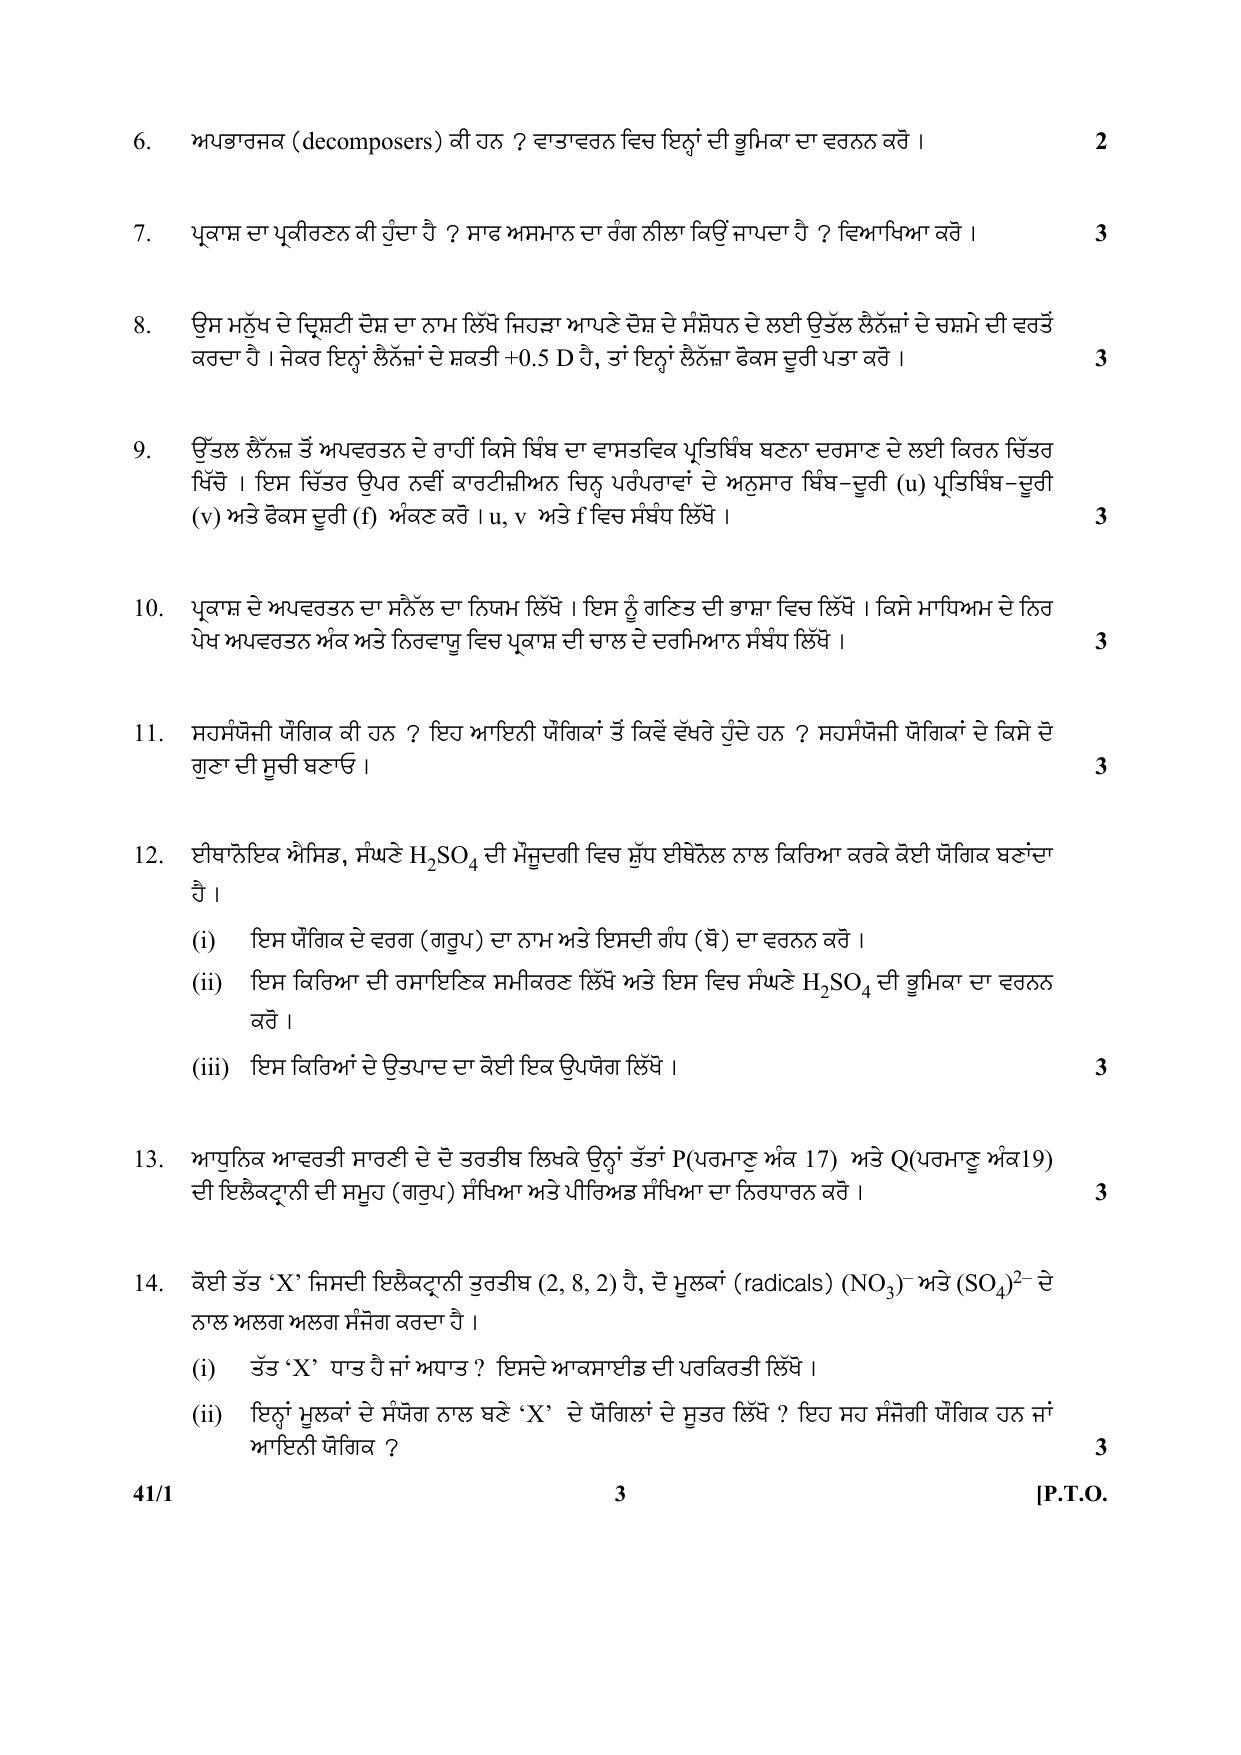 CBSE Class 10 41-1 (Science) Punjabi 2017-comptt Question Paper - Page 3